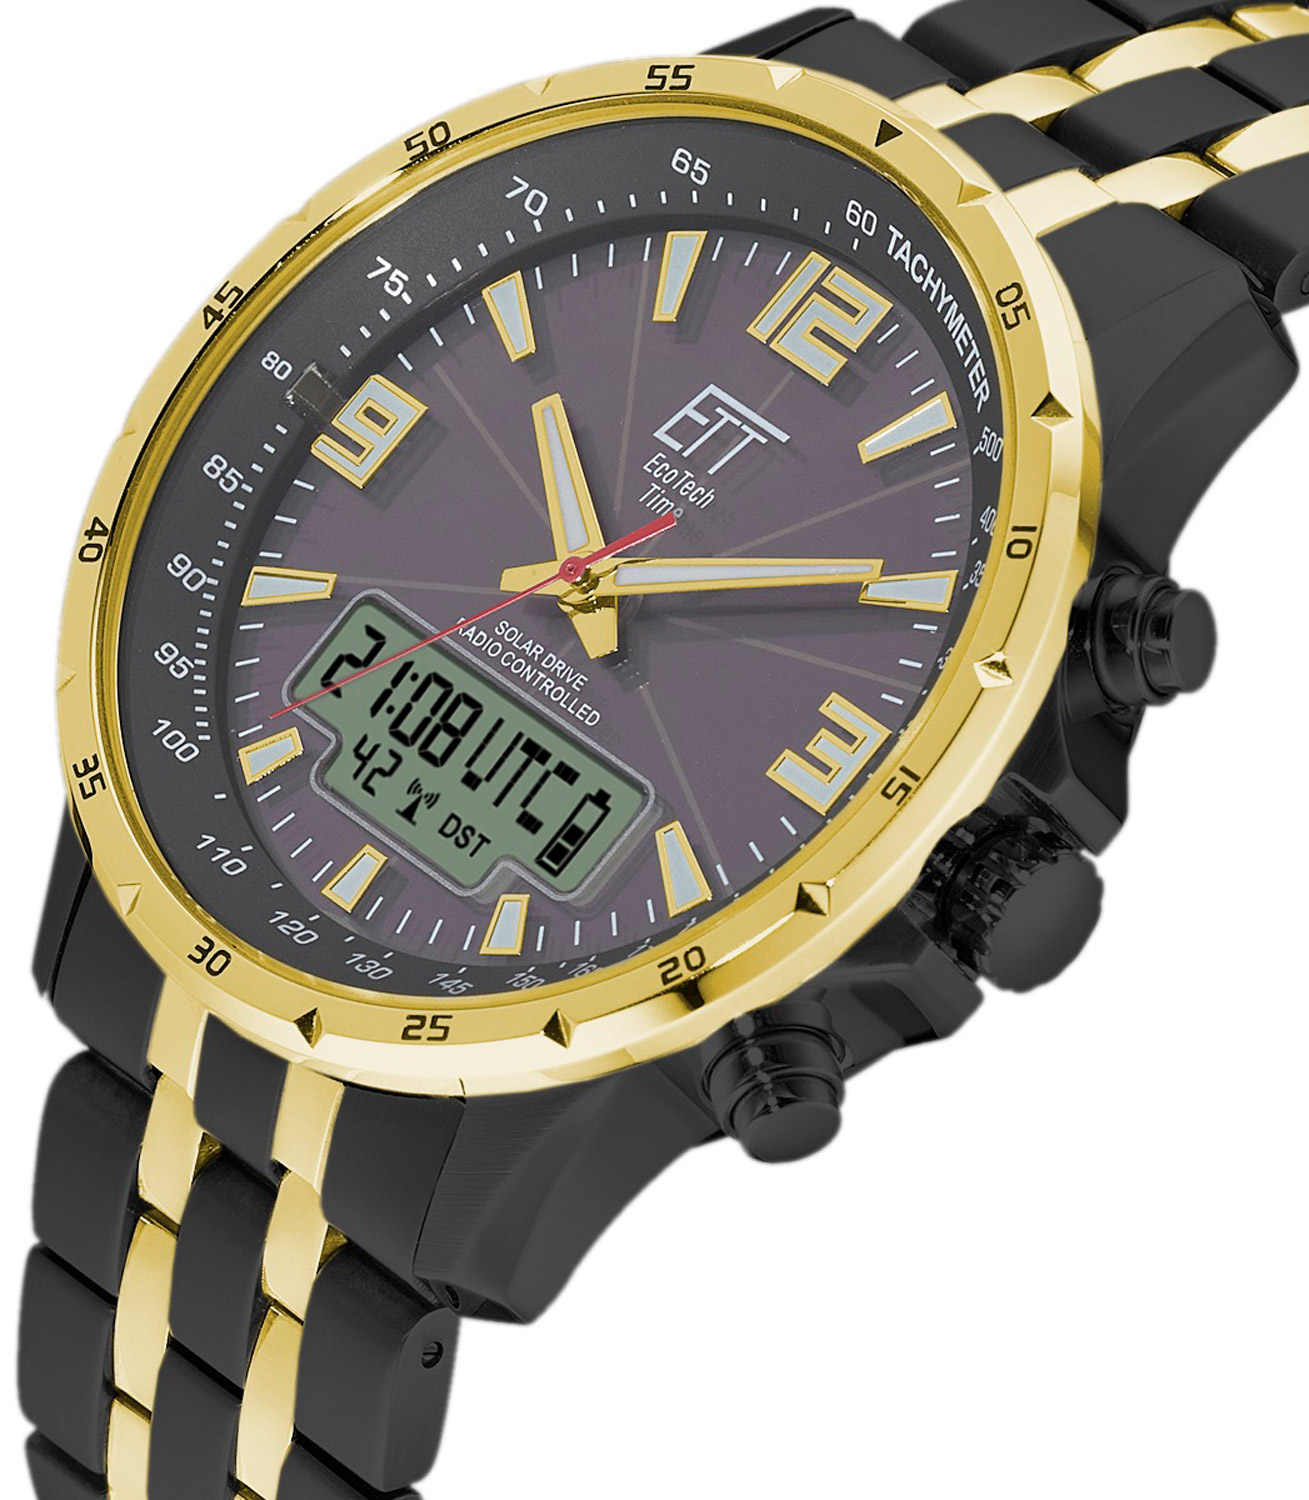 Radio-Controlled Time ETT Black/Gold uhrcenter Arctica Tech Eco -11567-21M Solar Watch EGS • Men\'s